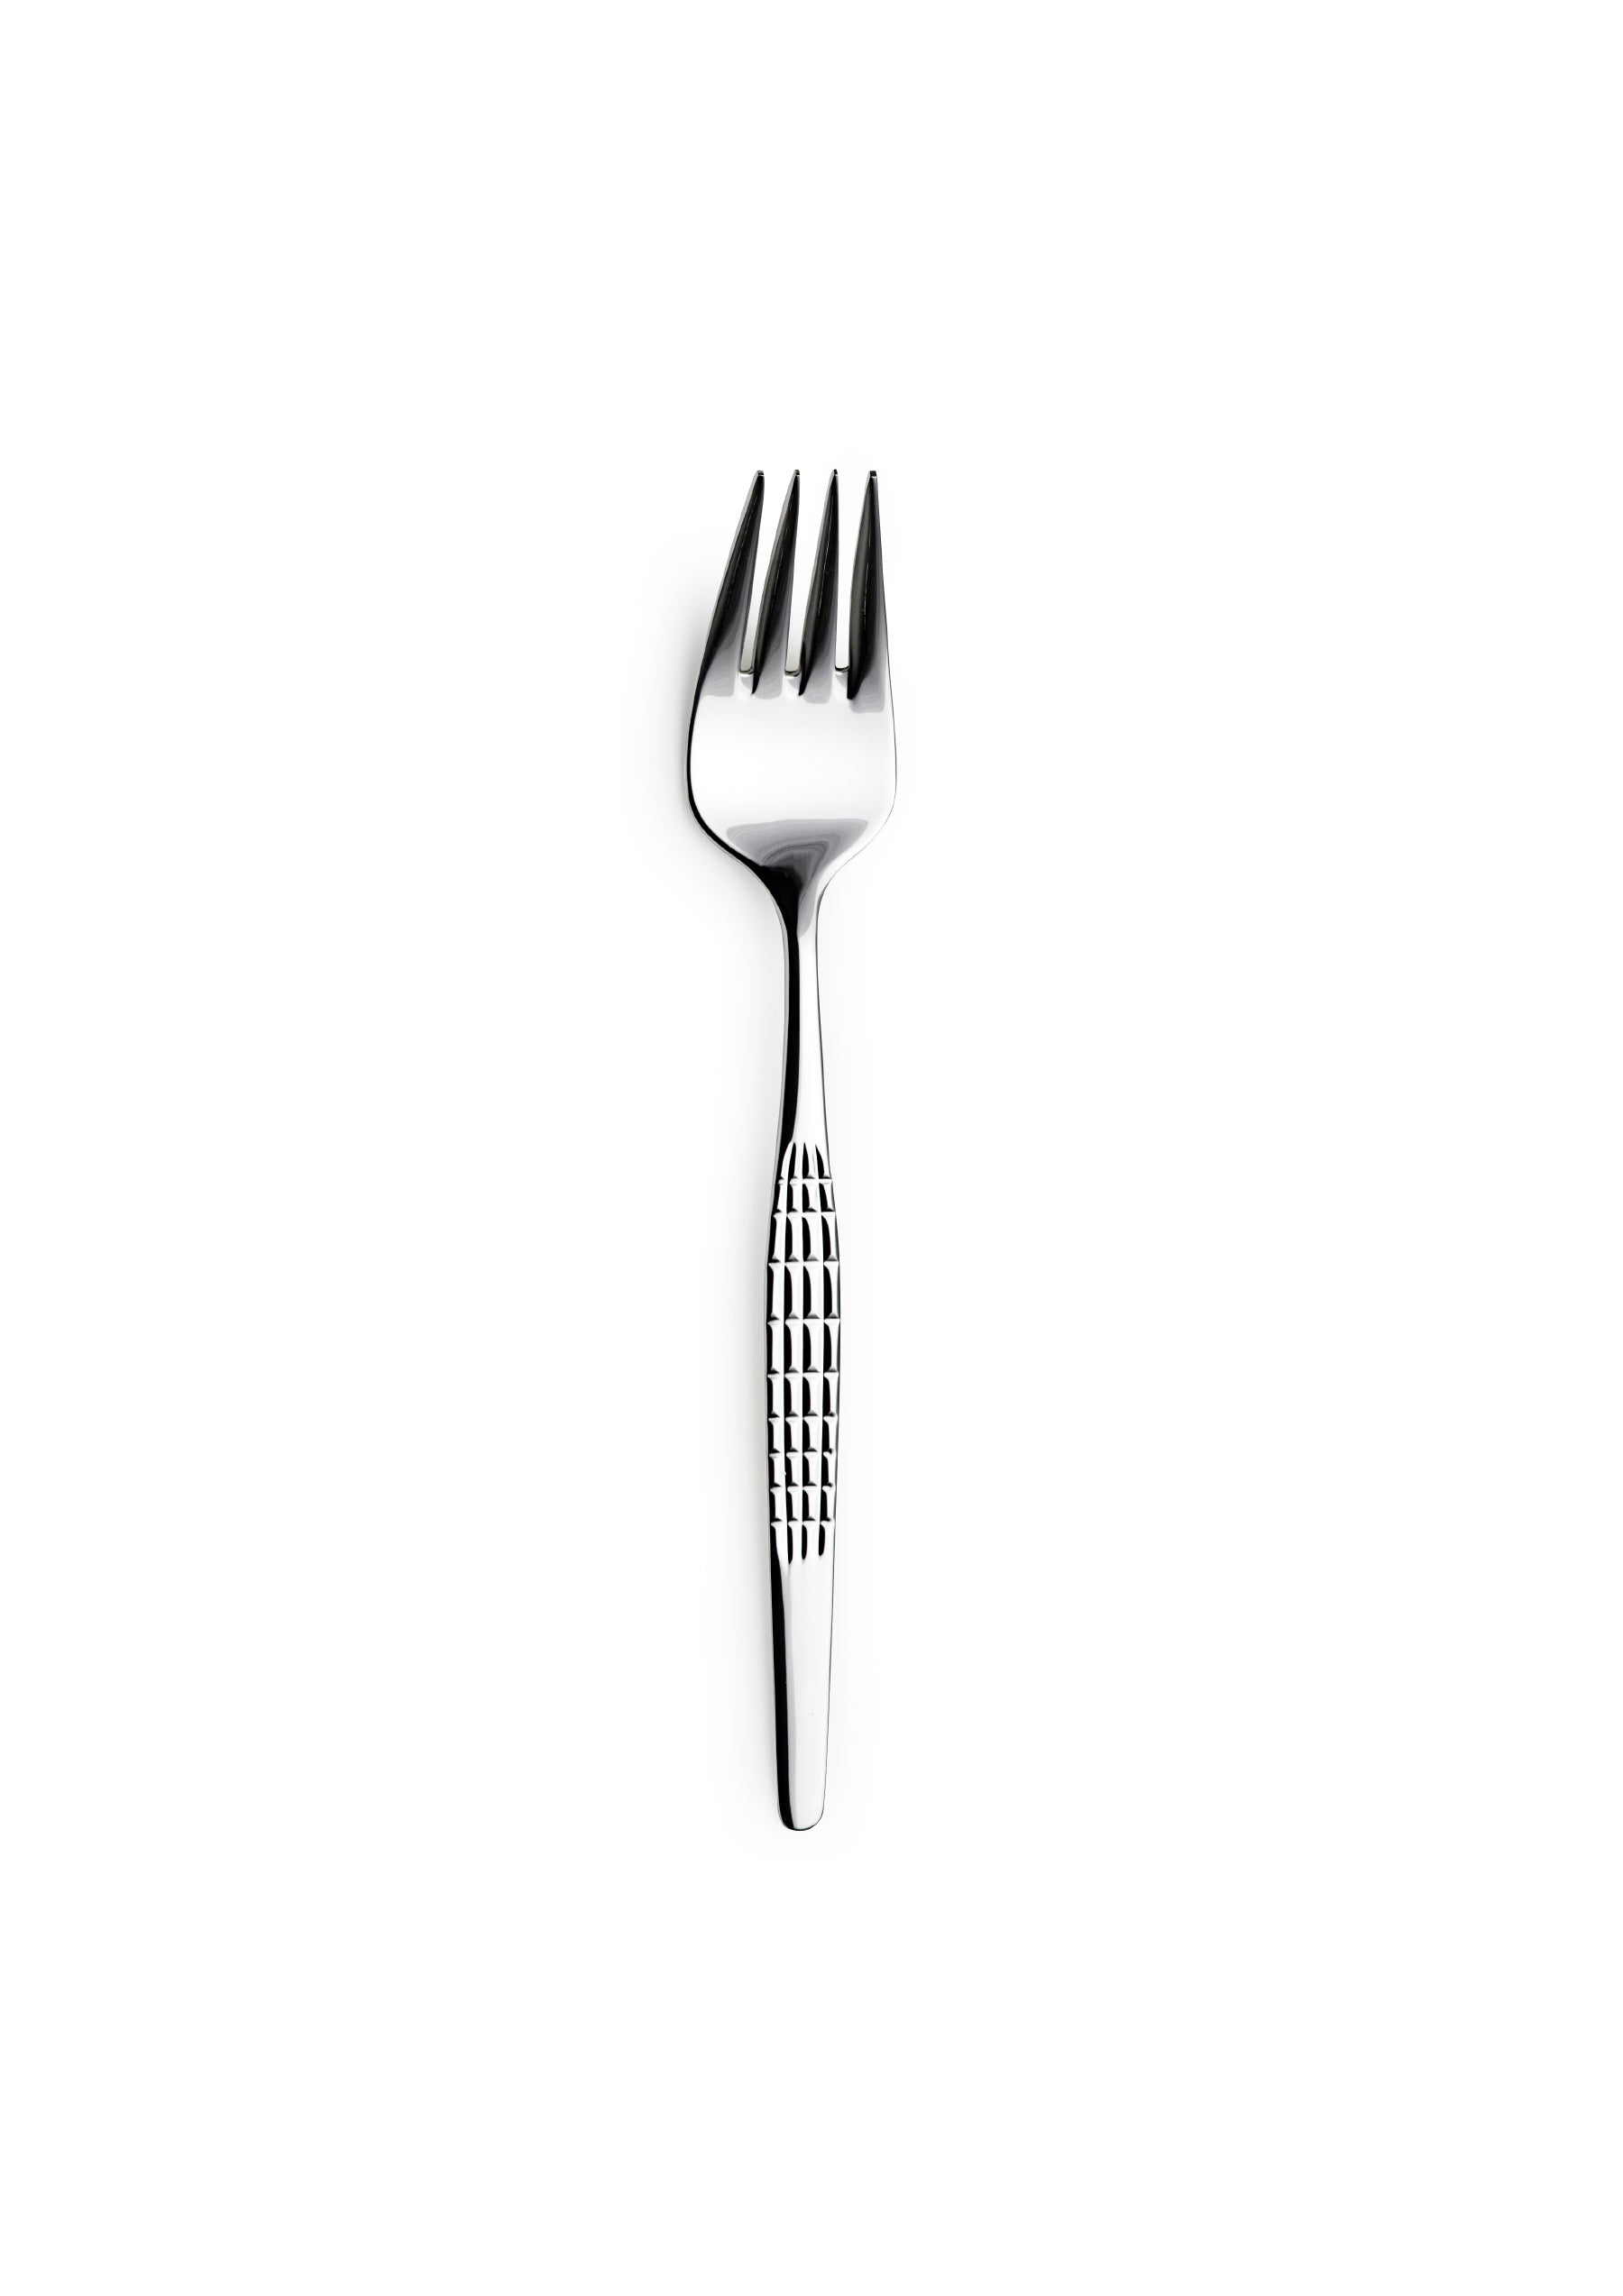 Faceted children's fork